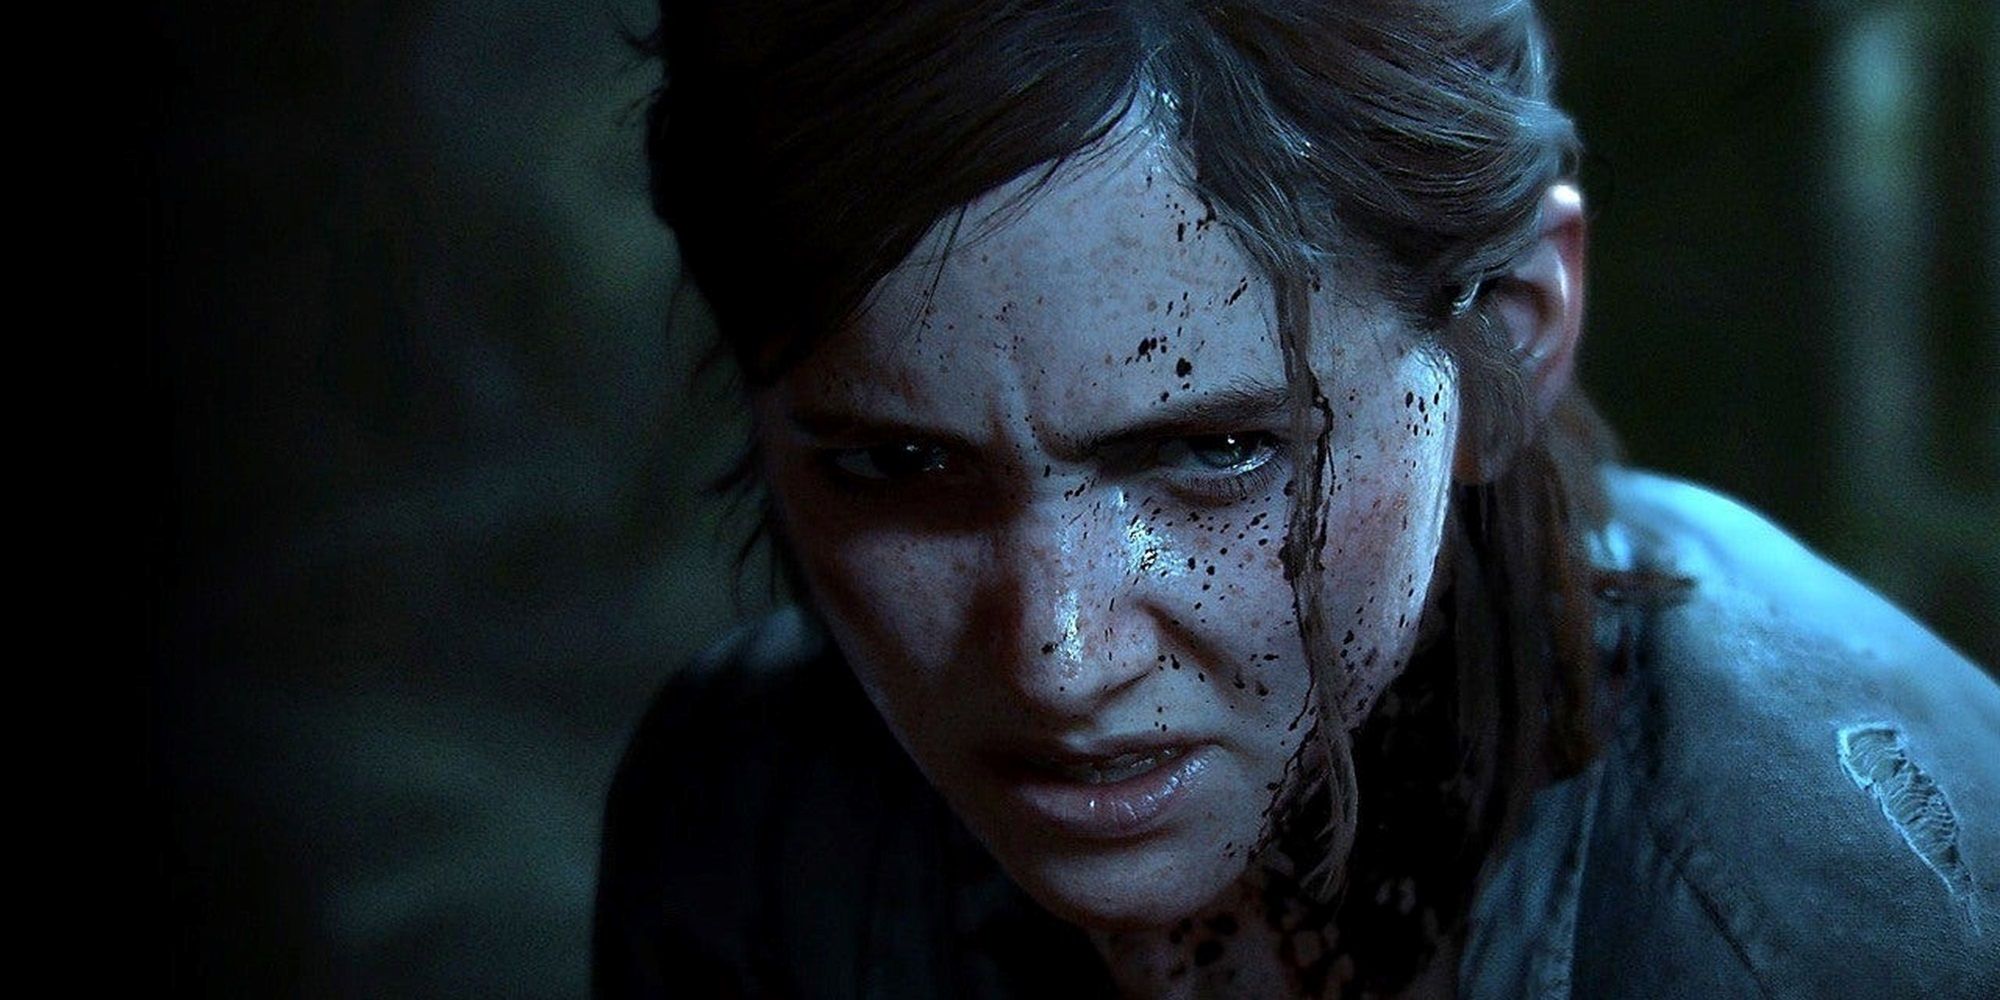 Ellie looking angry in The Last of Us Part II